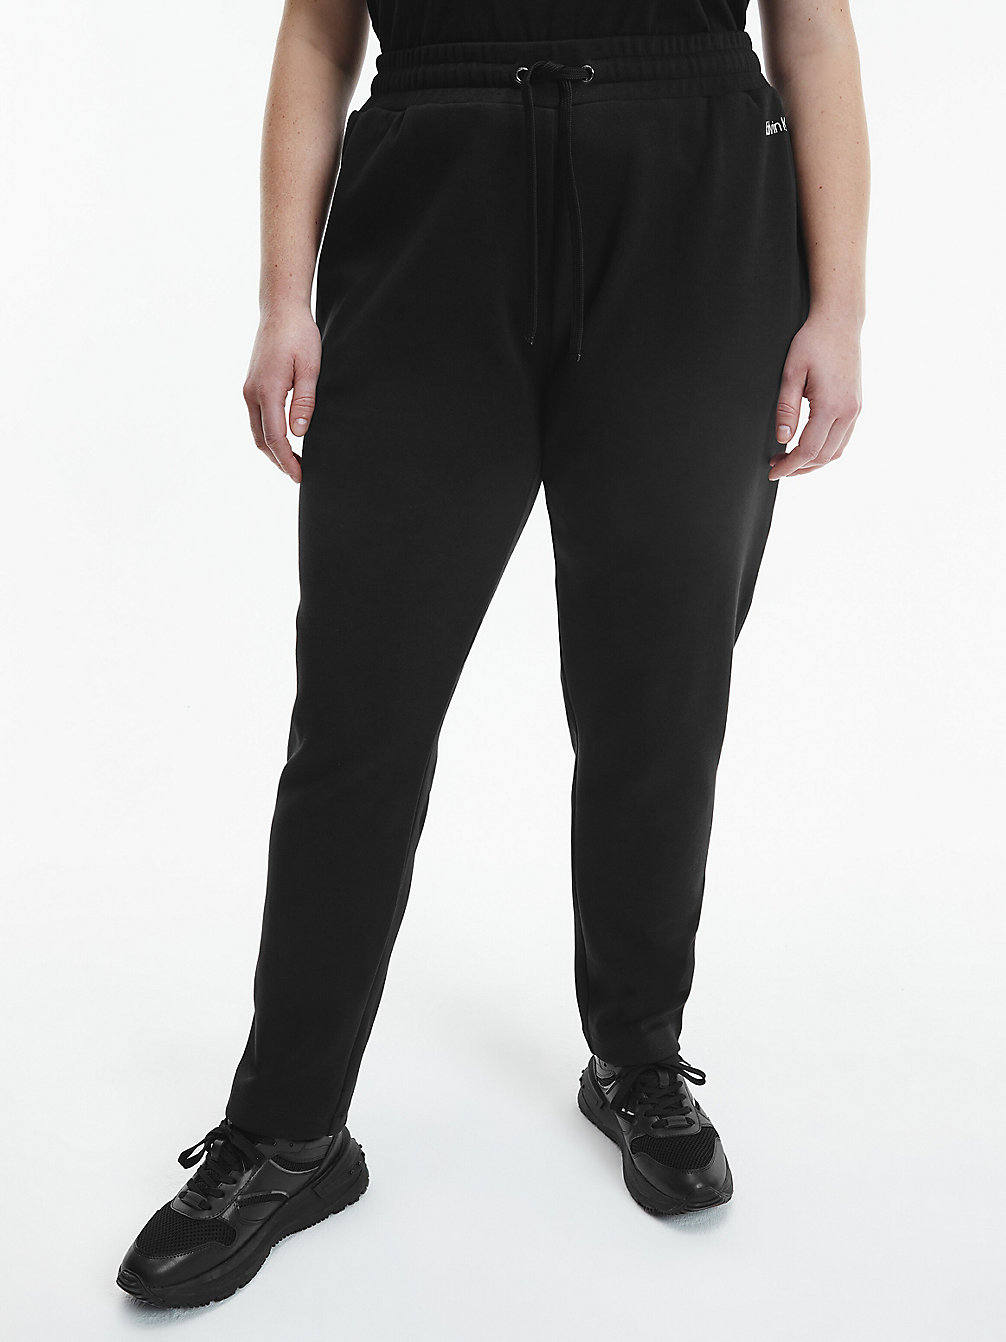 CK BLACK Jogginghose In Großen Größen undefined Damen Calvin Klein